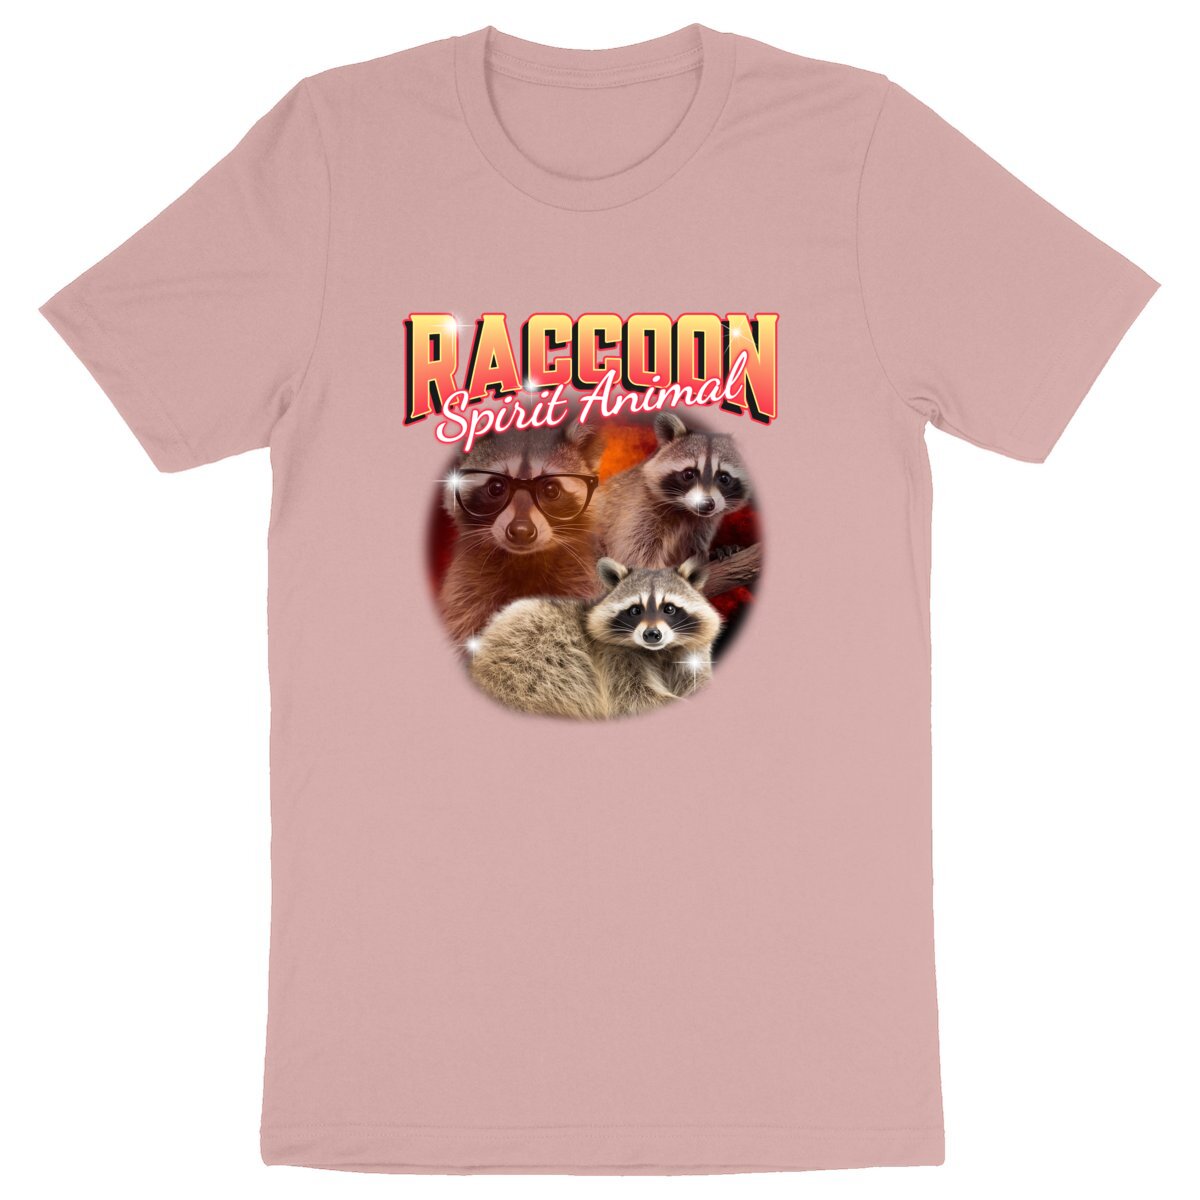 Raccoon Spirit Animal - Organic T-shirt